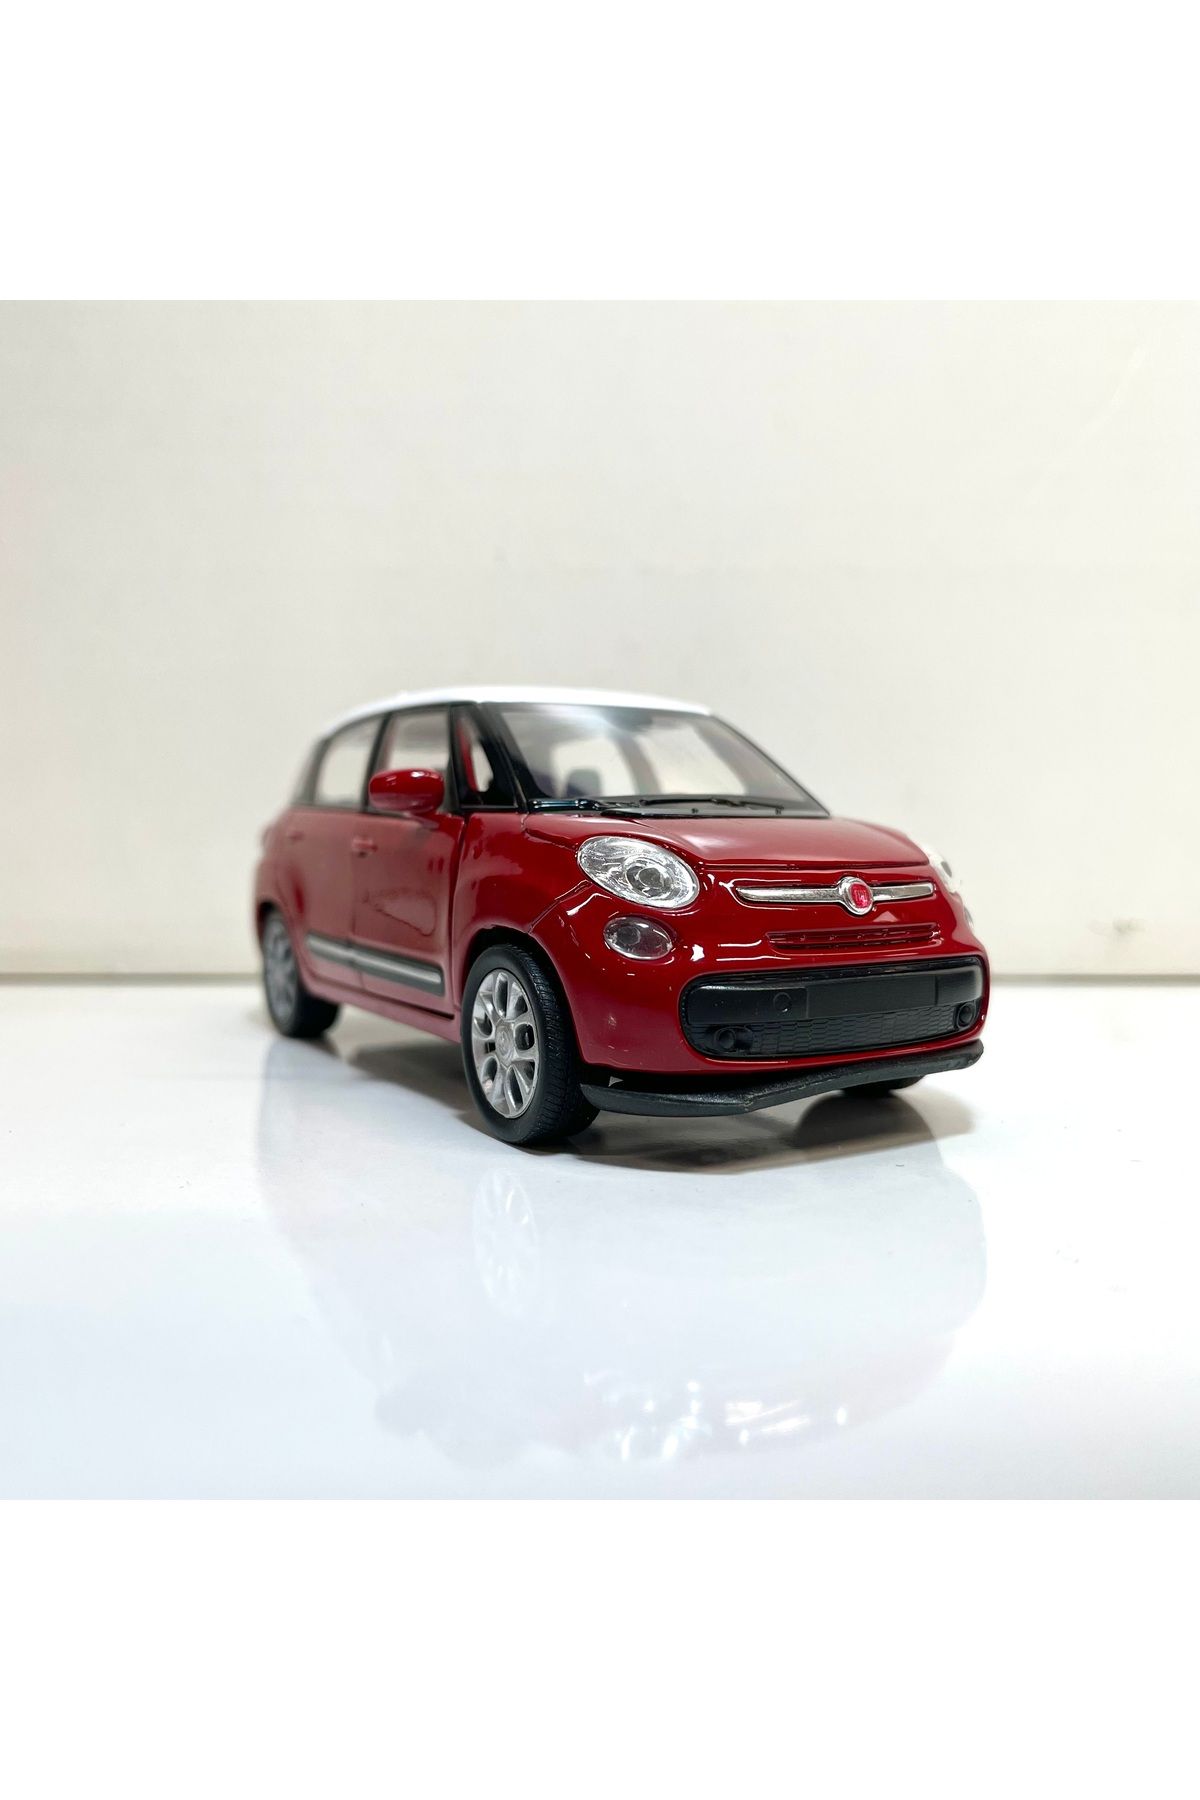 WELLY 2013 Fiat 500L 1/36 Ölçek Welly Diecast Metal Model Araba Oyuncak Araba